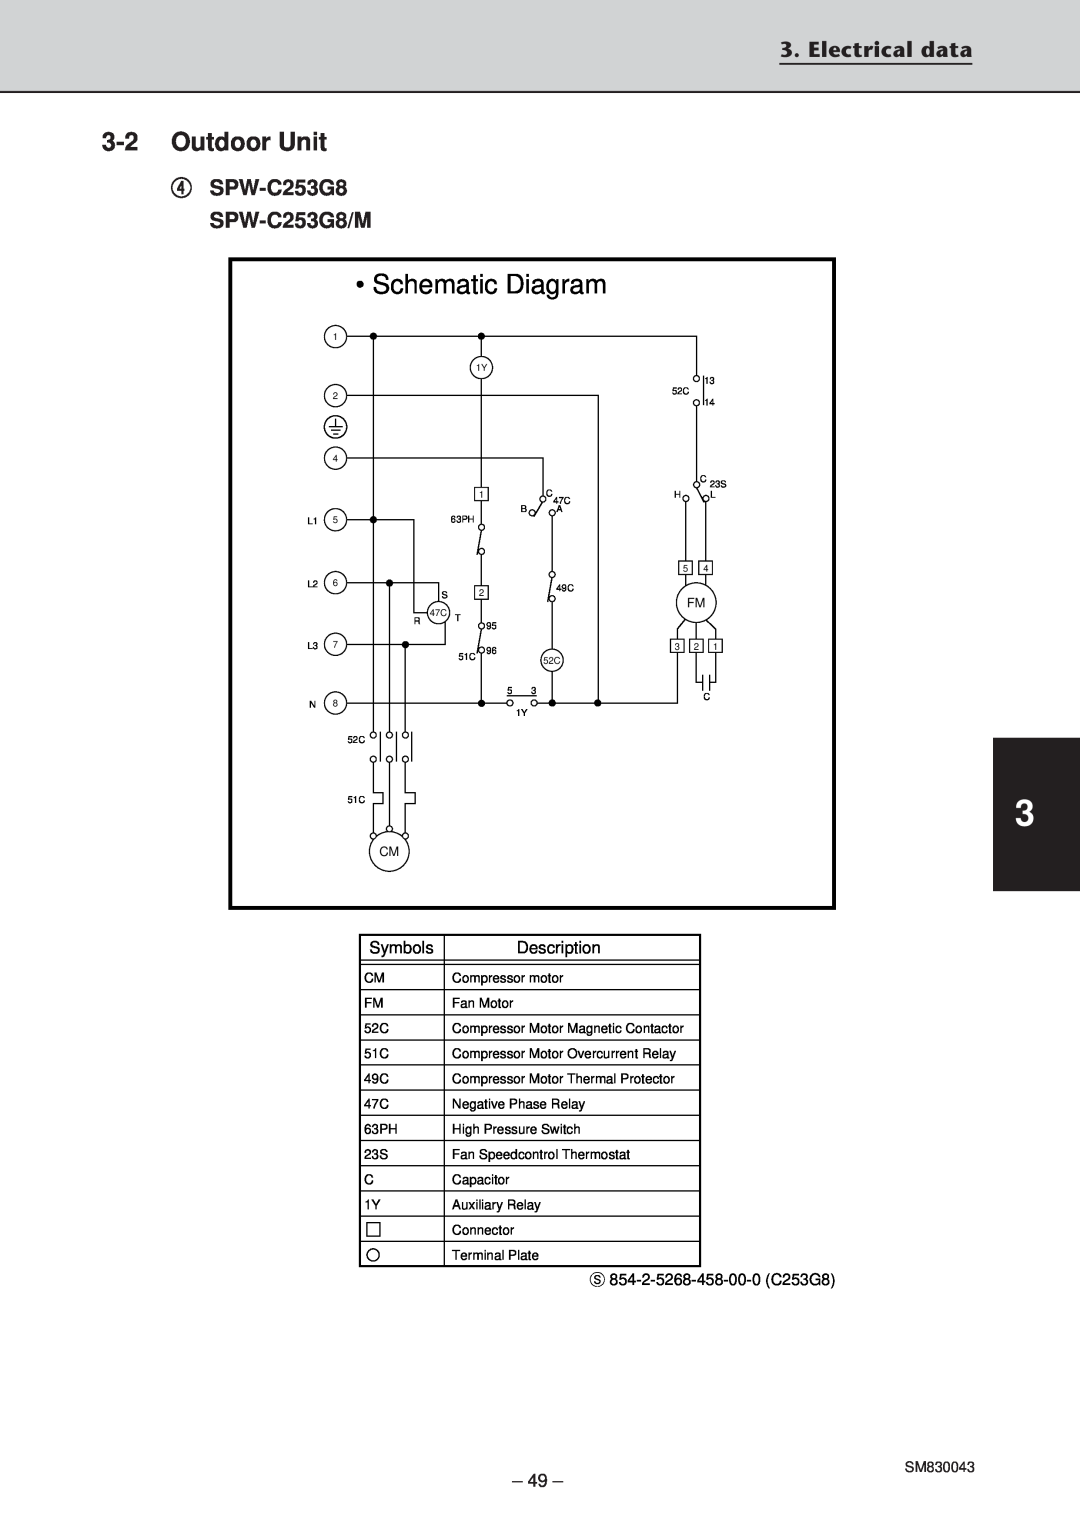 Sanyo SPW-T483G56 Schematic Diagram, 3-2Outdoor Unit, Electrical data, Symbols, Description, S 854-2-5268-458-00-0C253G8 